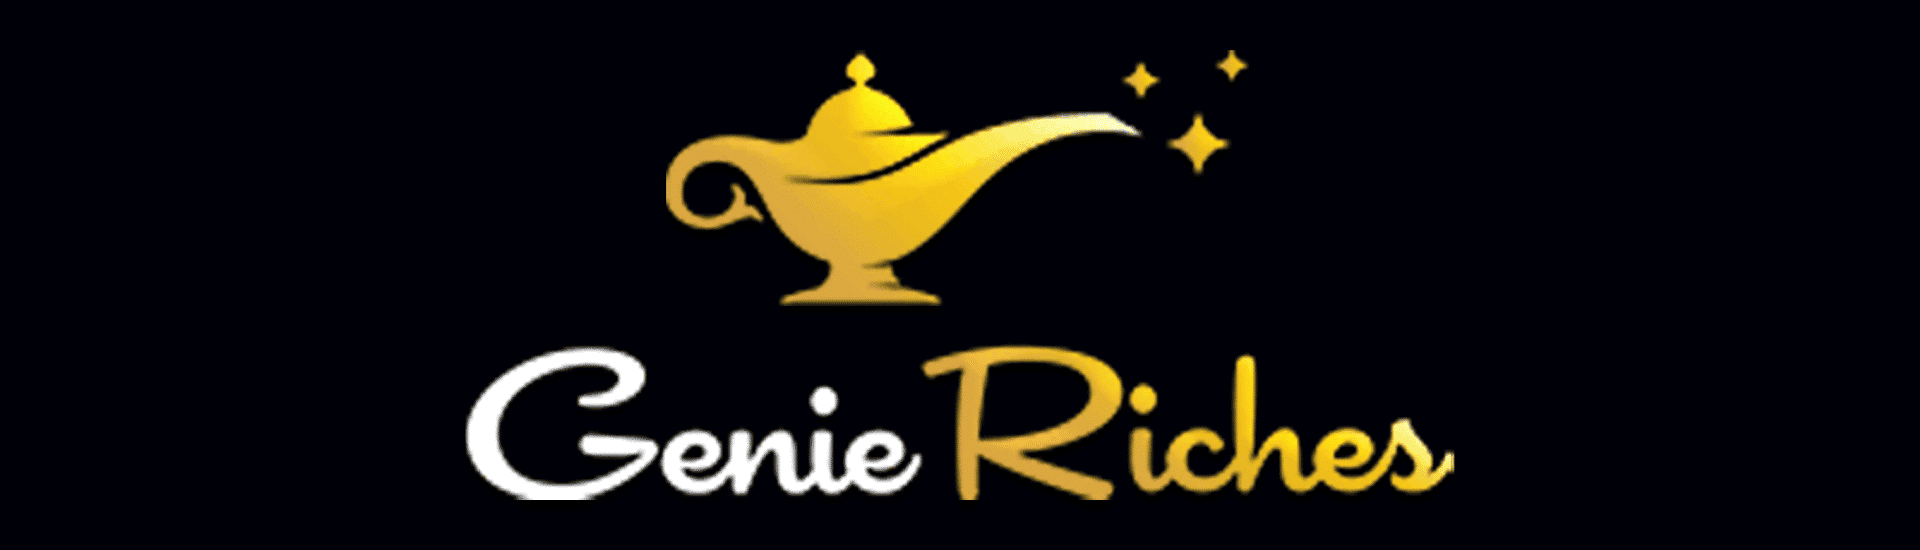 Genie Riches Featured Image